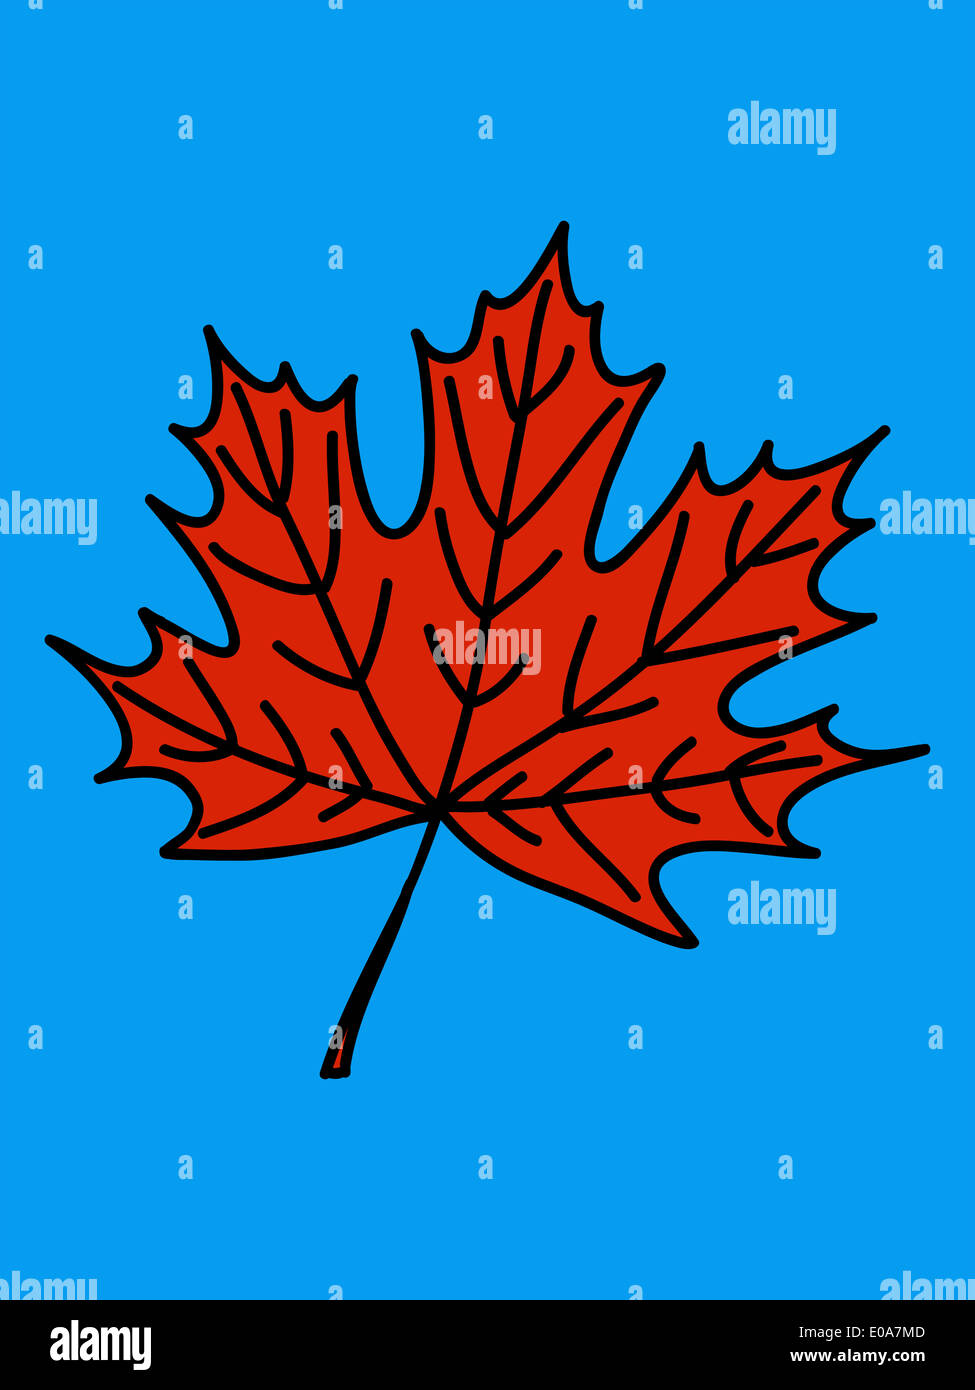 Red maple leaf illustration Stock Photo